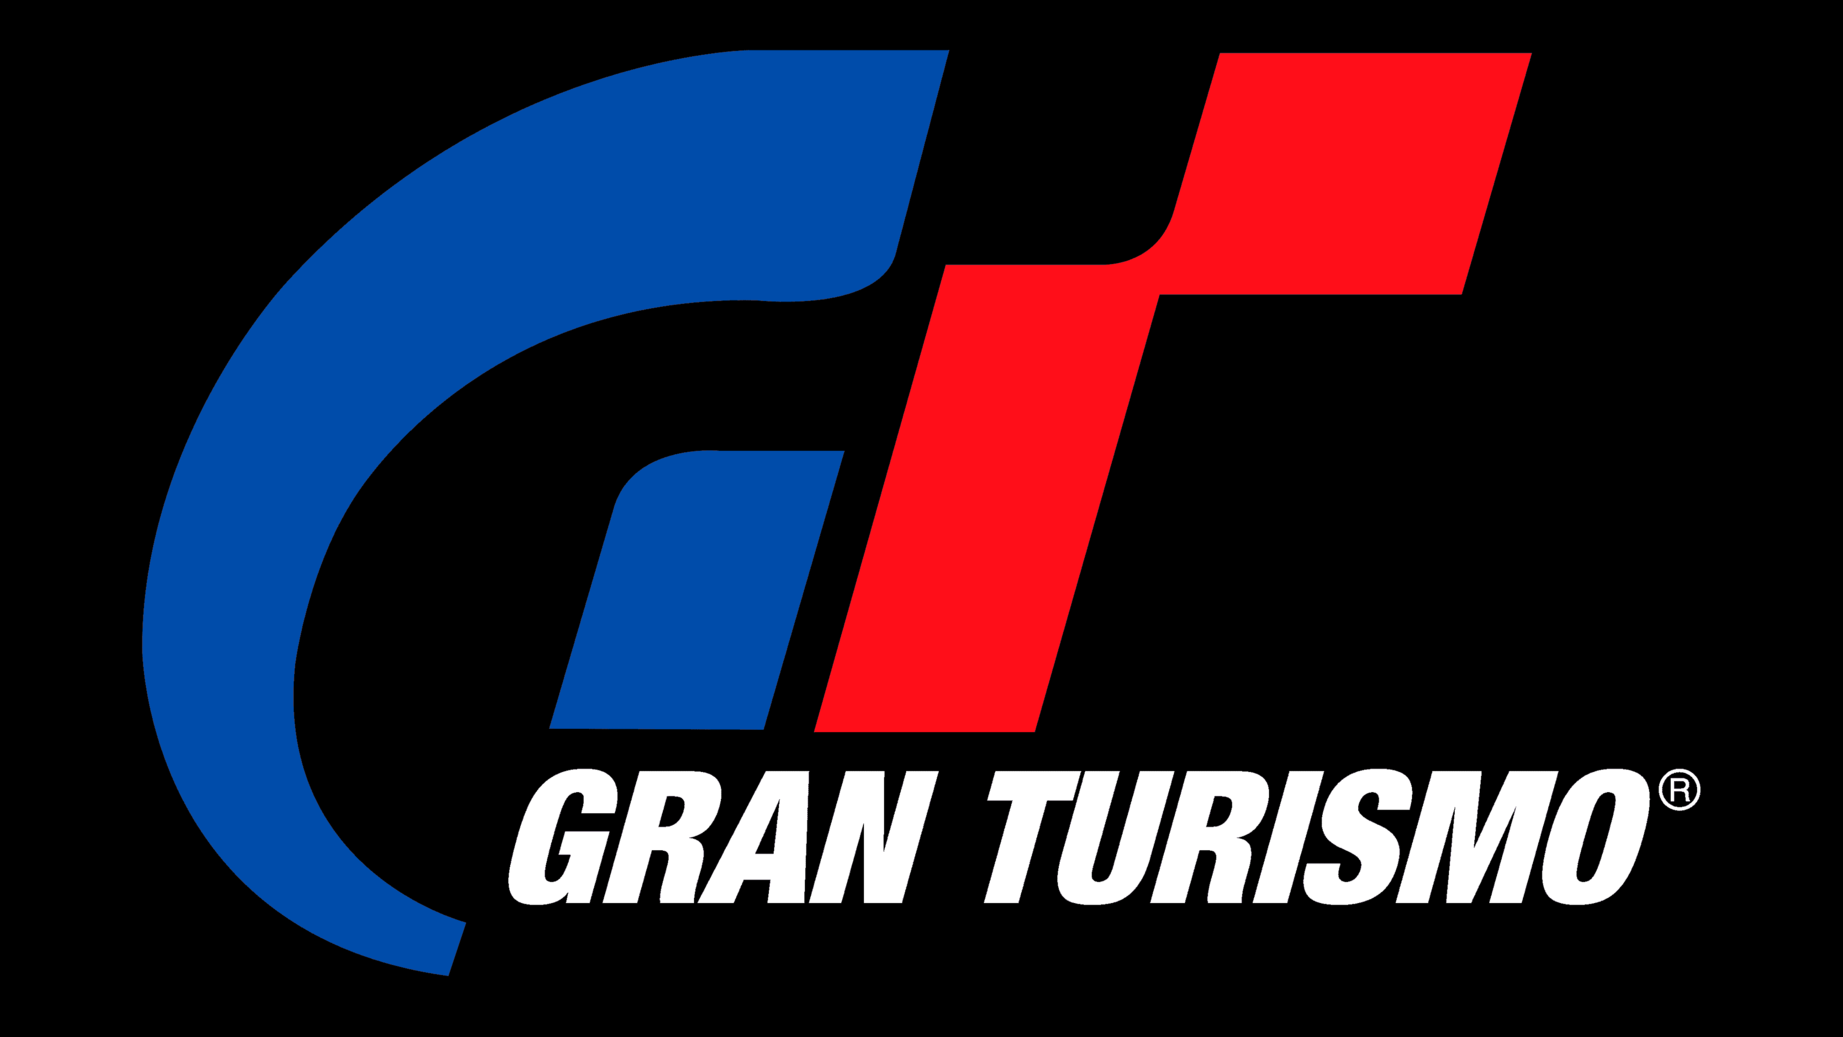 Gran turismo logo